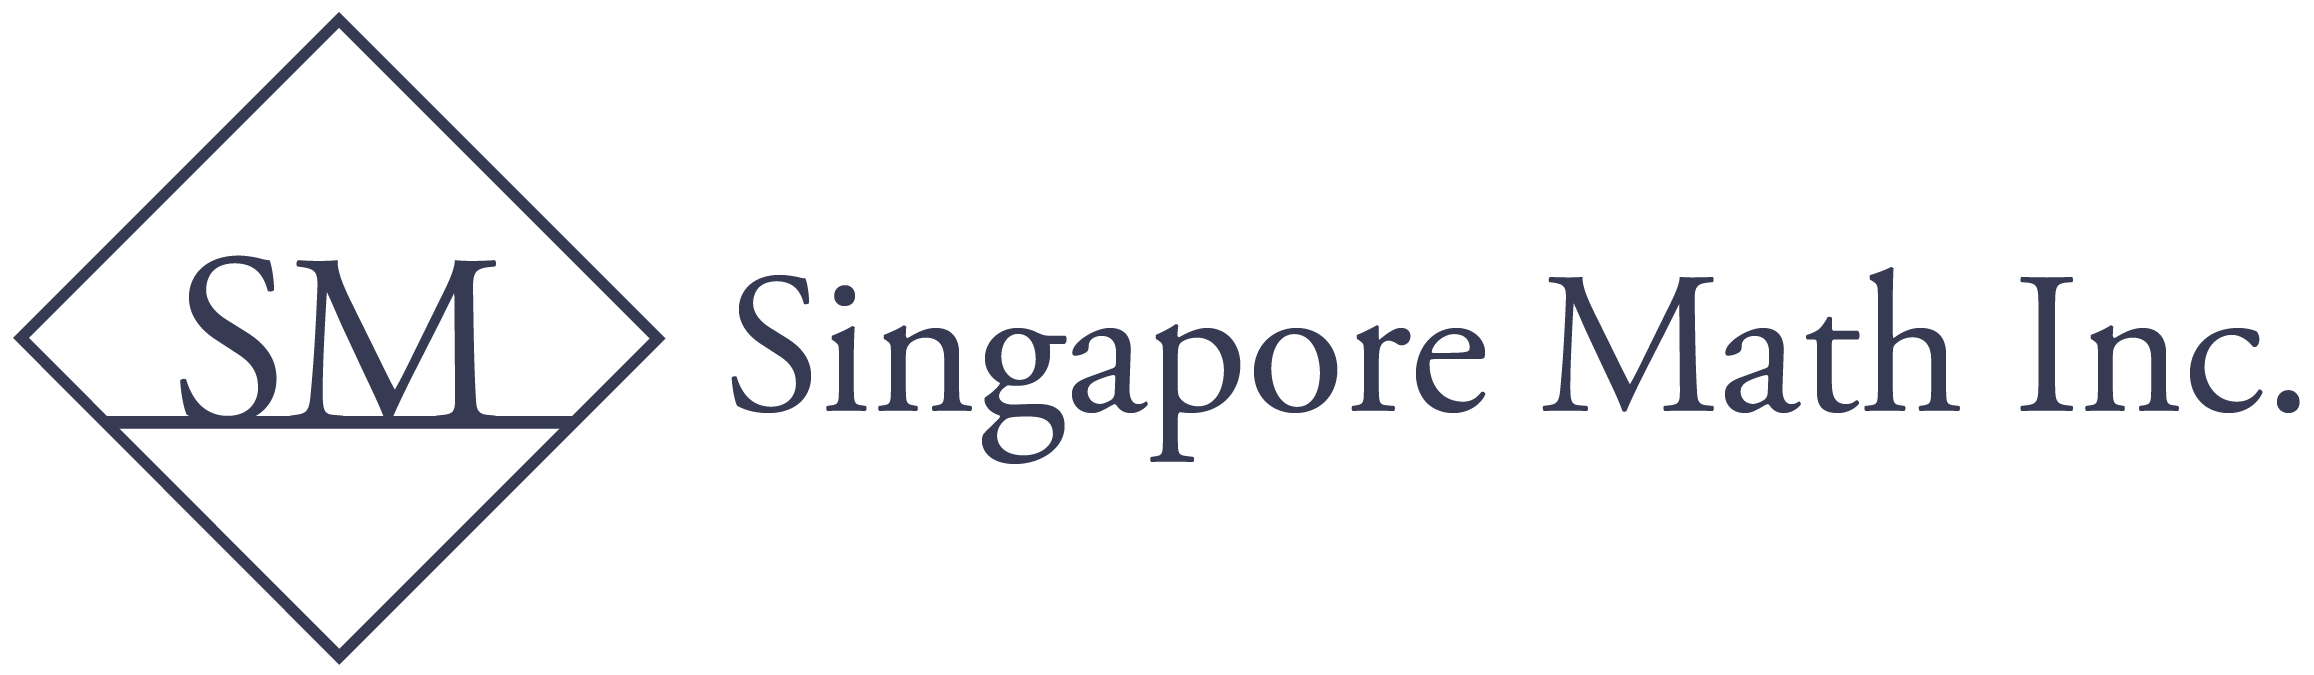 Singapore Math logo